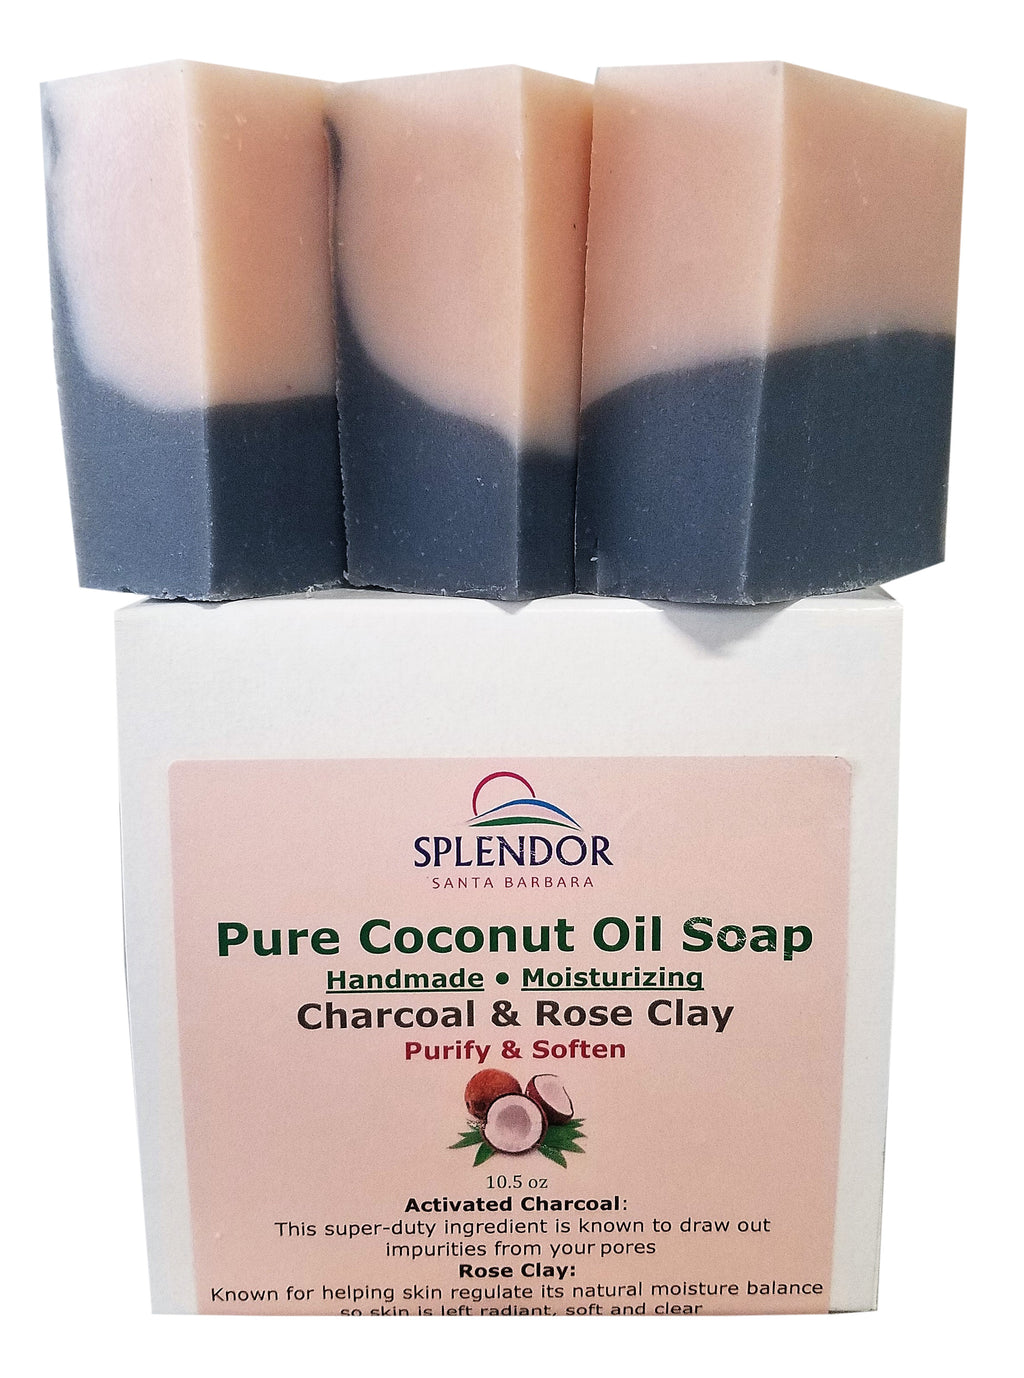 Splendor Activated Charcoal & Rose Clay Spa Face & Body Bar Soap - Pure Coconut Oil Soap. Handmade, Vegan, Natural, Moisturizing